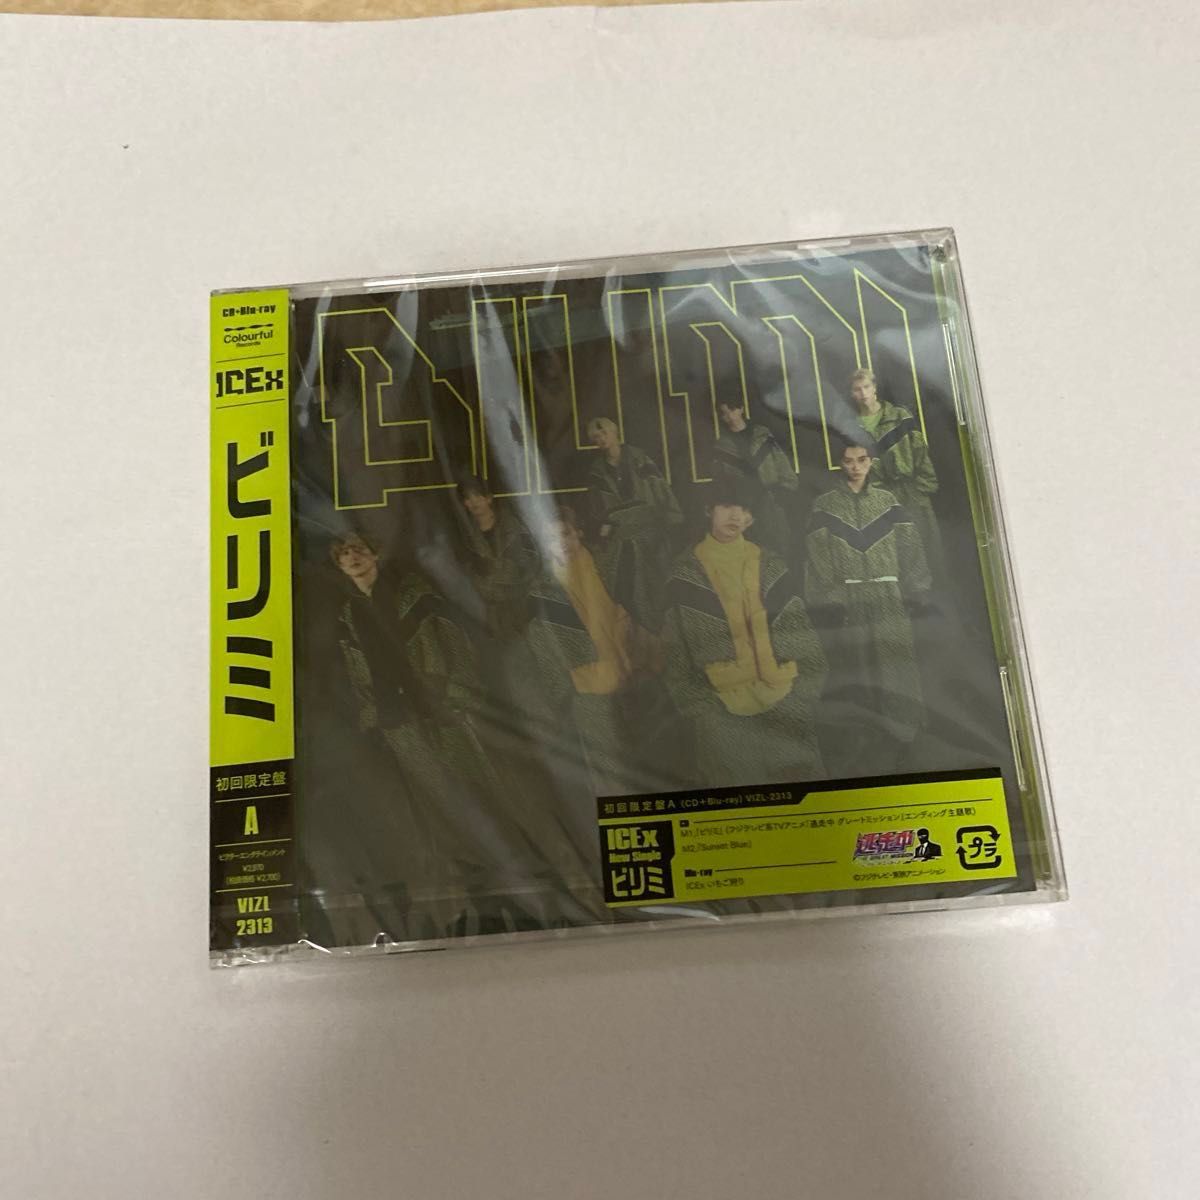 CD ICEx/ビリミ 初回限定盤A [ビクターエンタテインメント]特典会ポストカードお渡し会 筒井俊旭